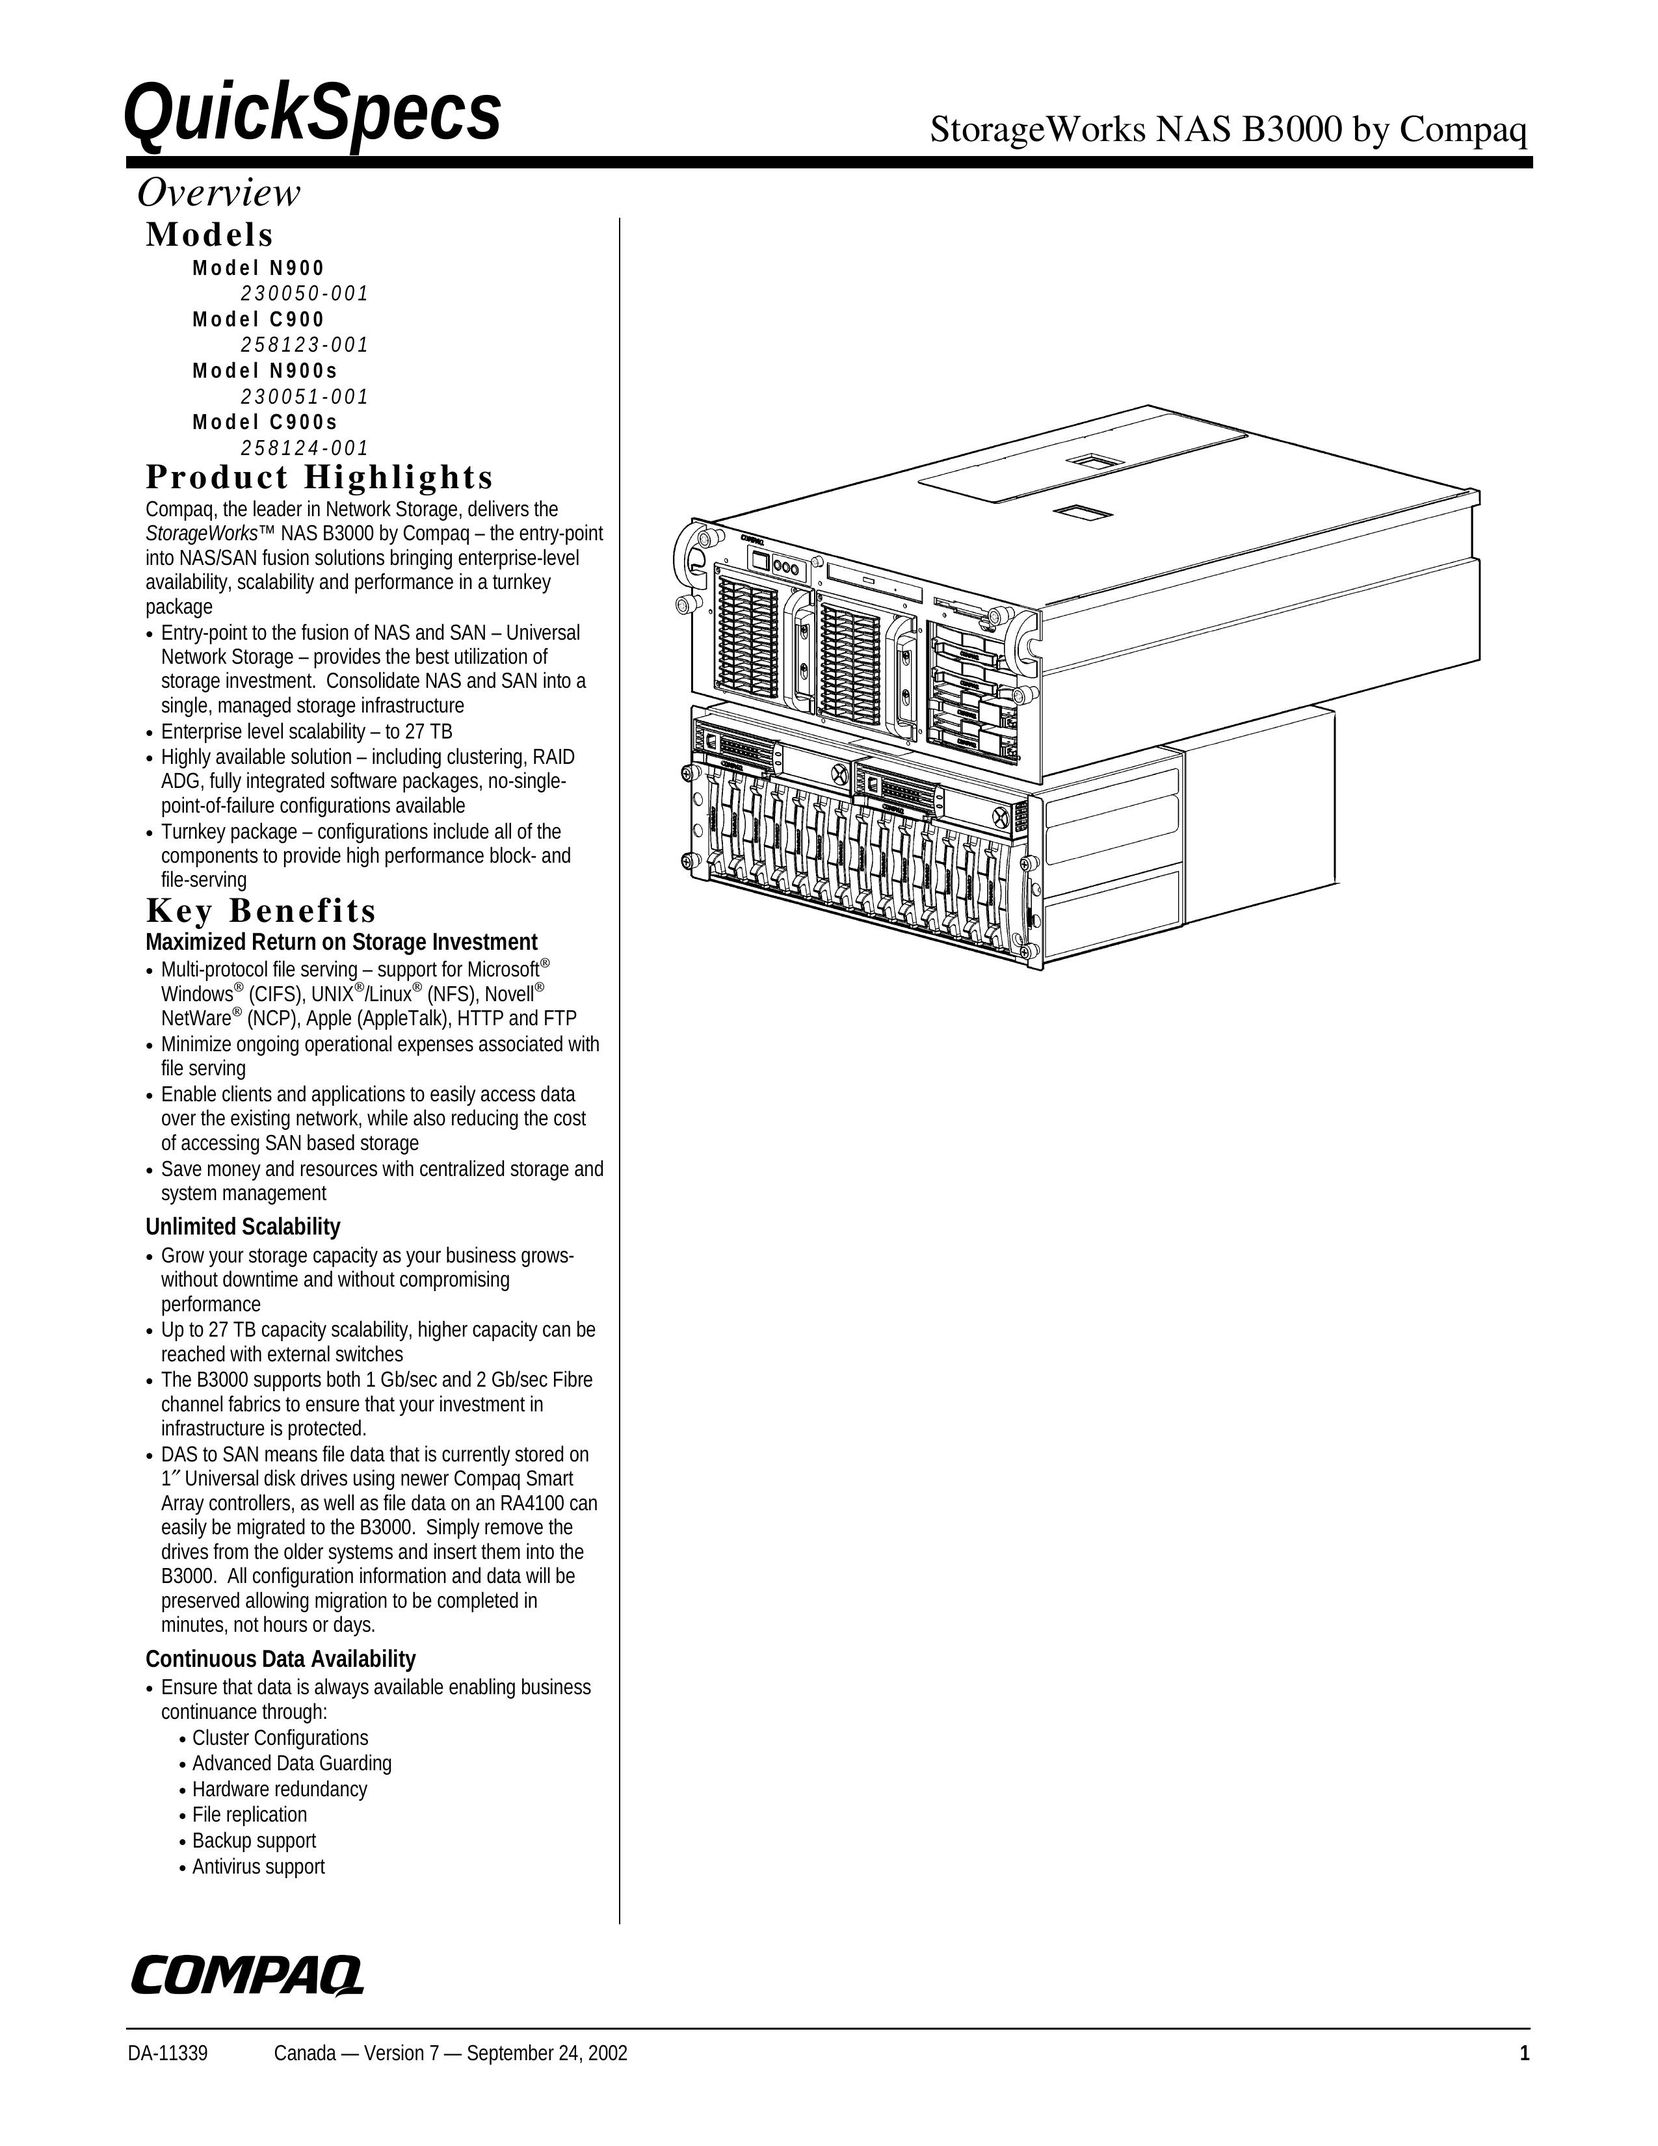 Compaq NAS B3000 Network Card User Manual